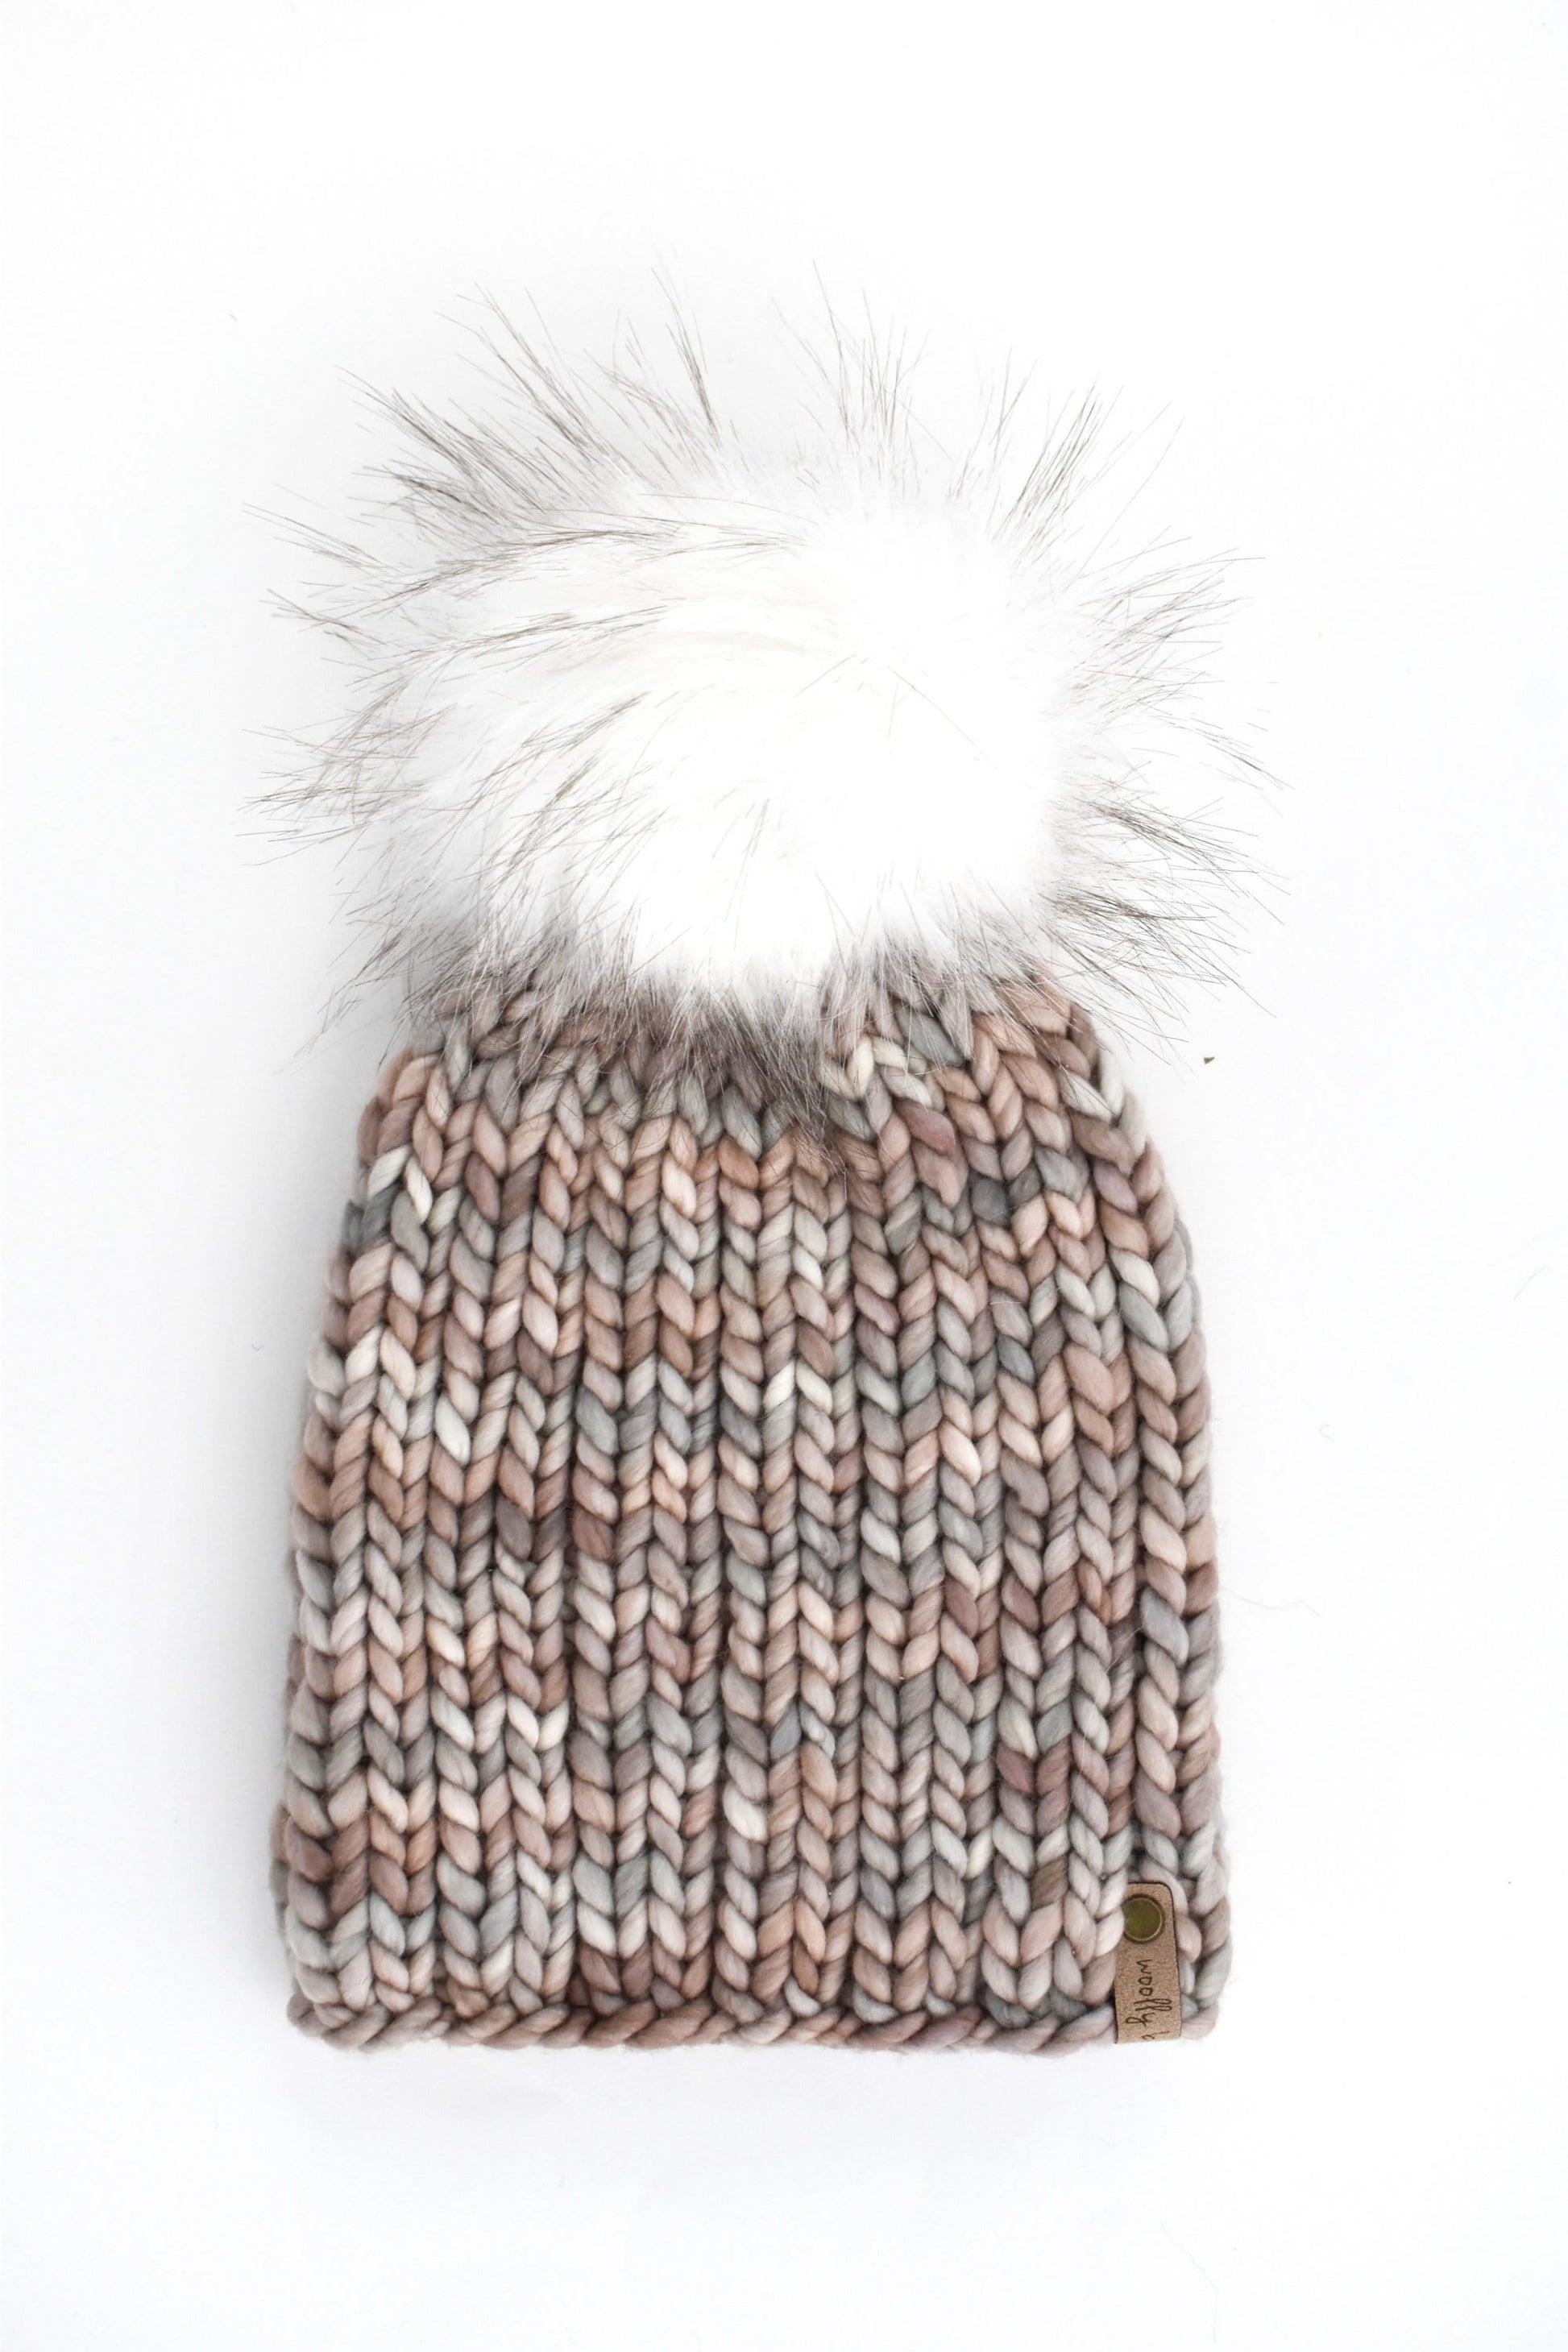 Pearl Gray Merino Wool Knit Hat with Faux Fur Pom Pom